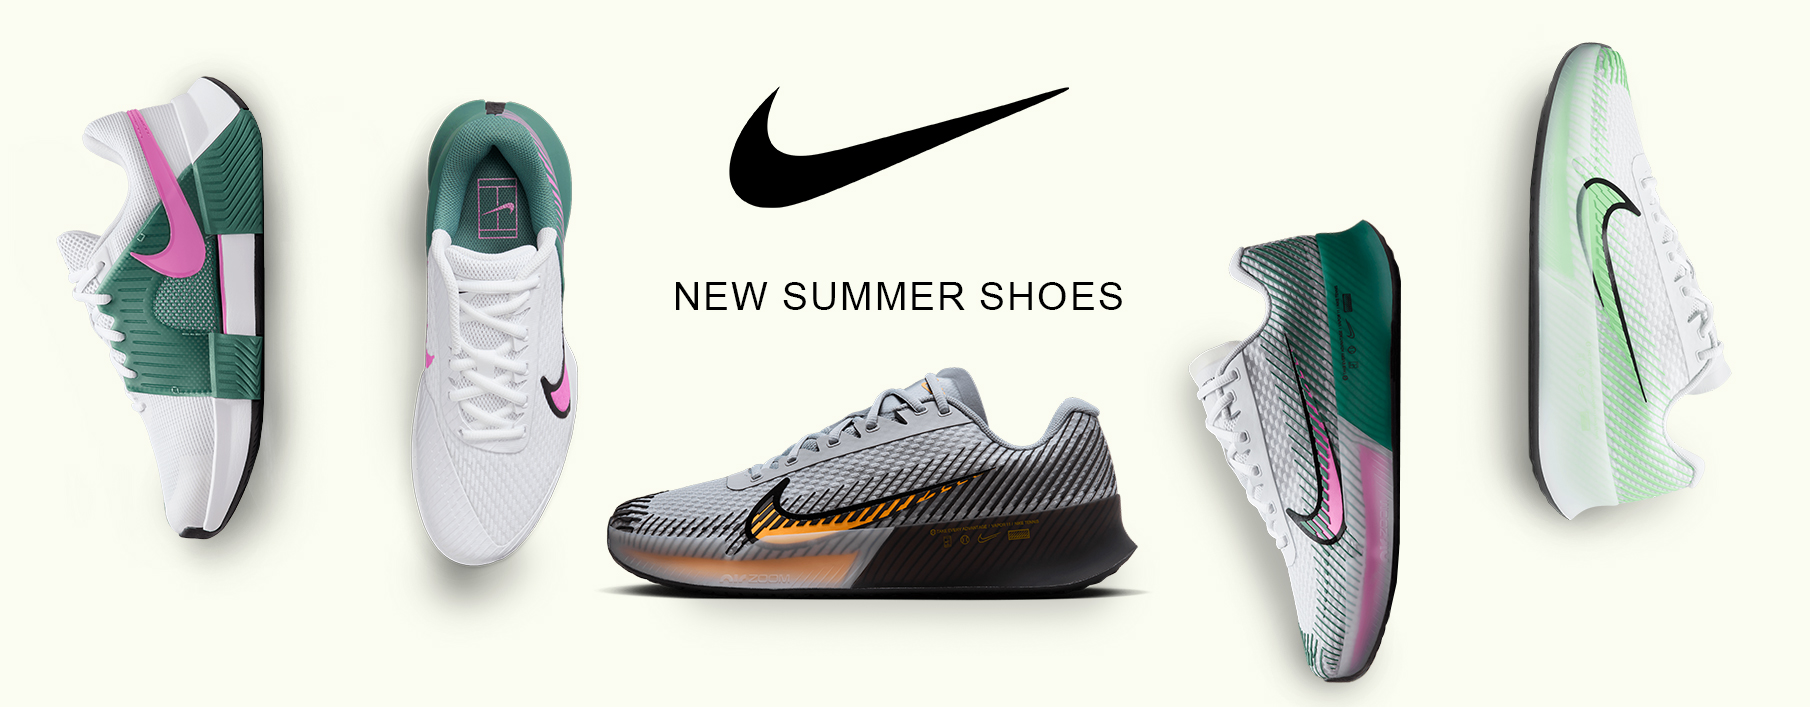 tennis Nike New shoes